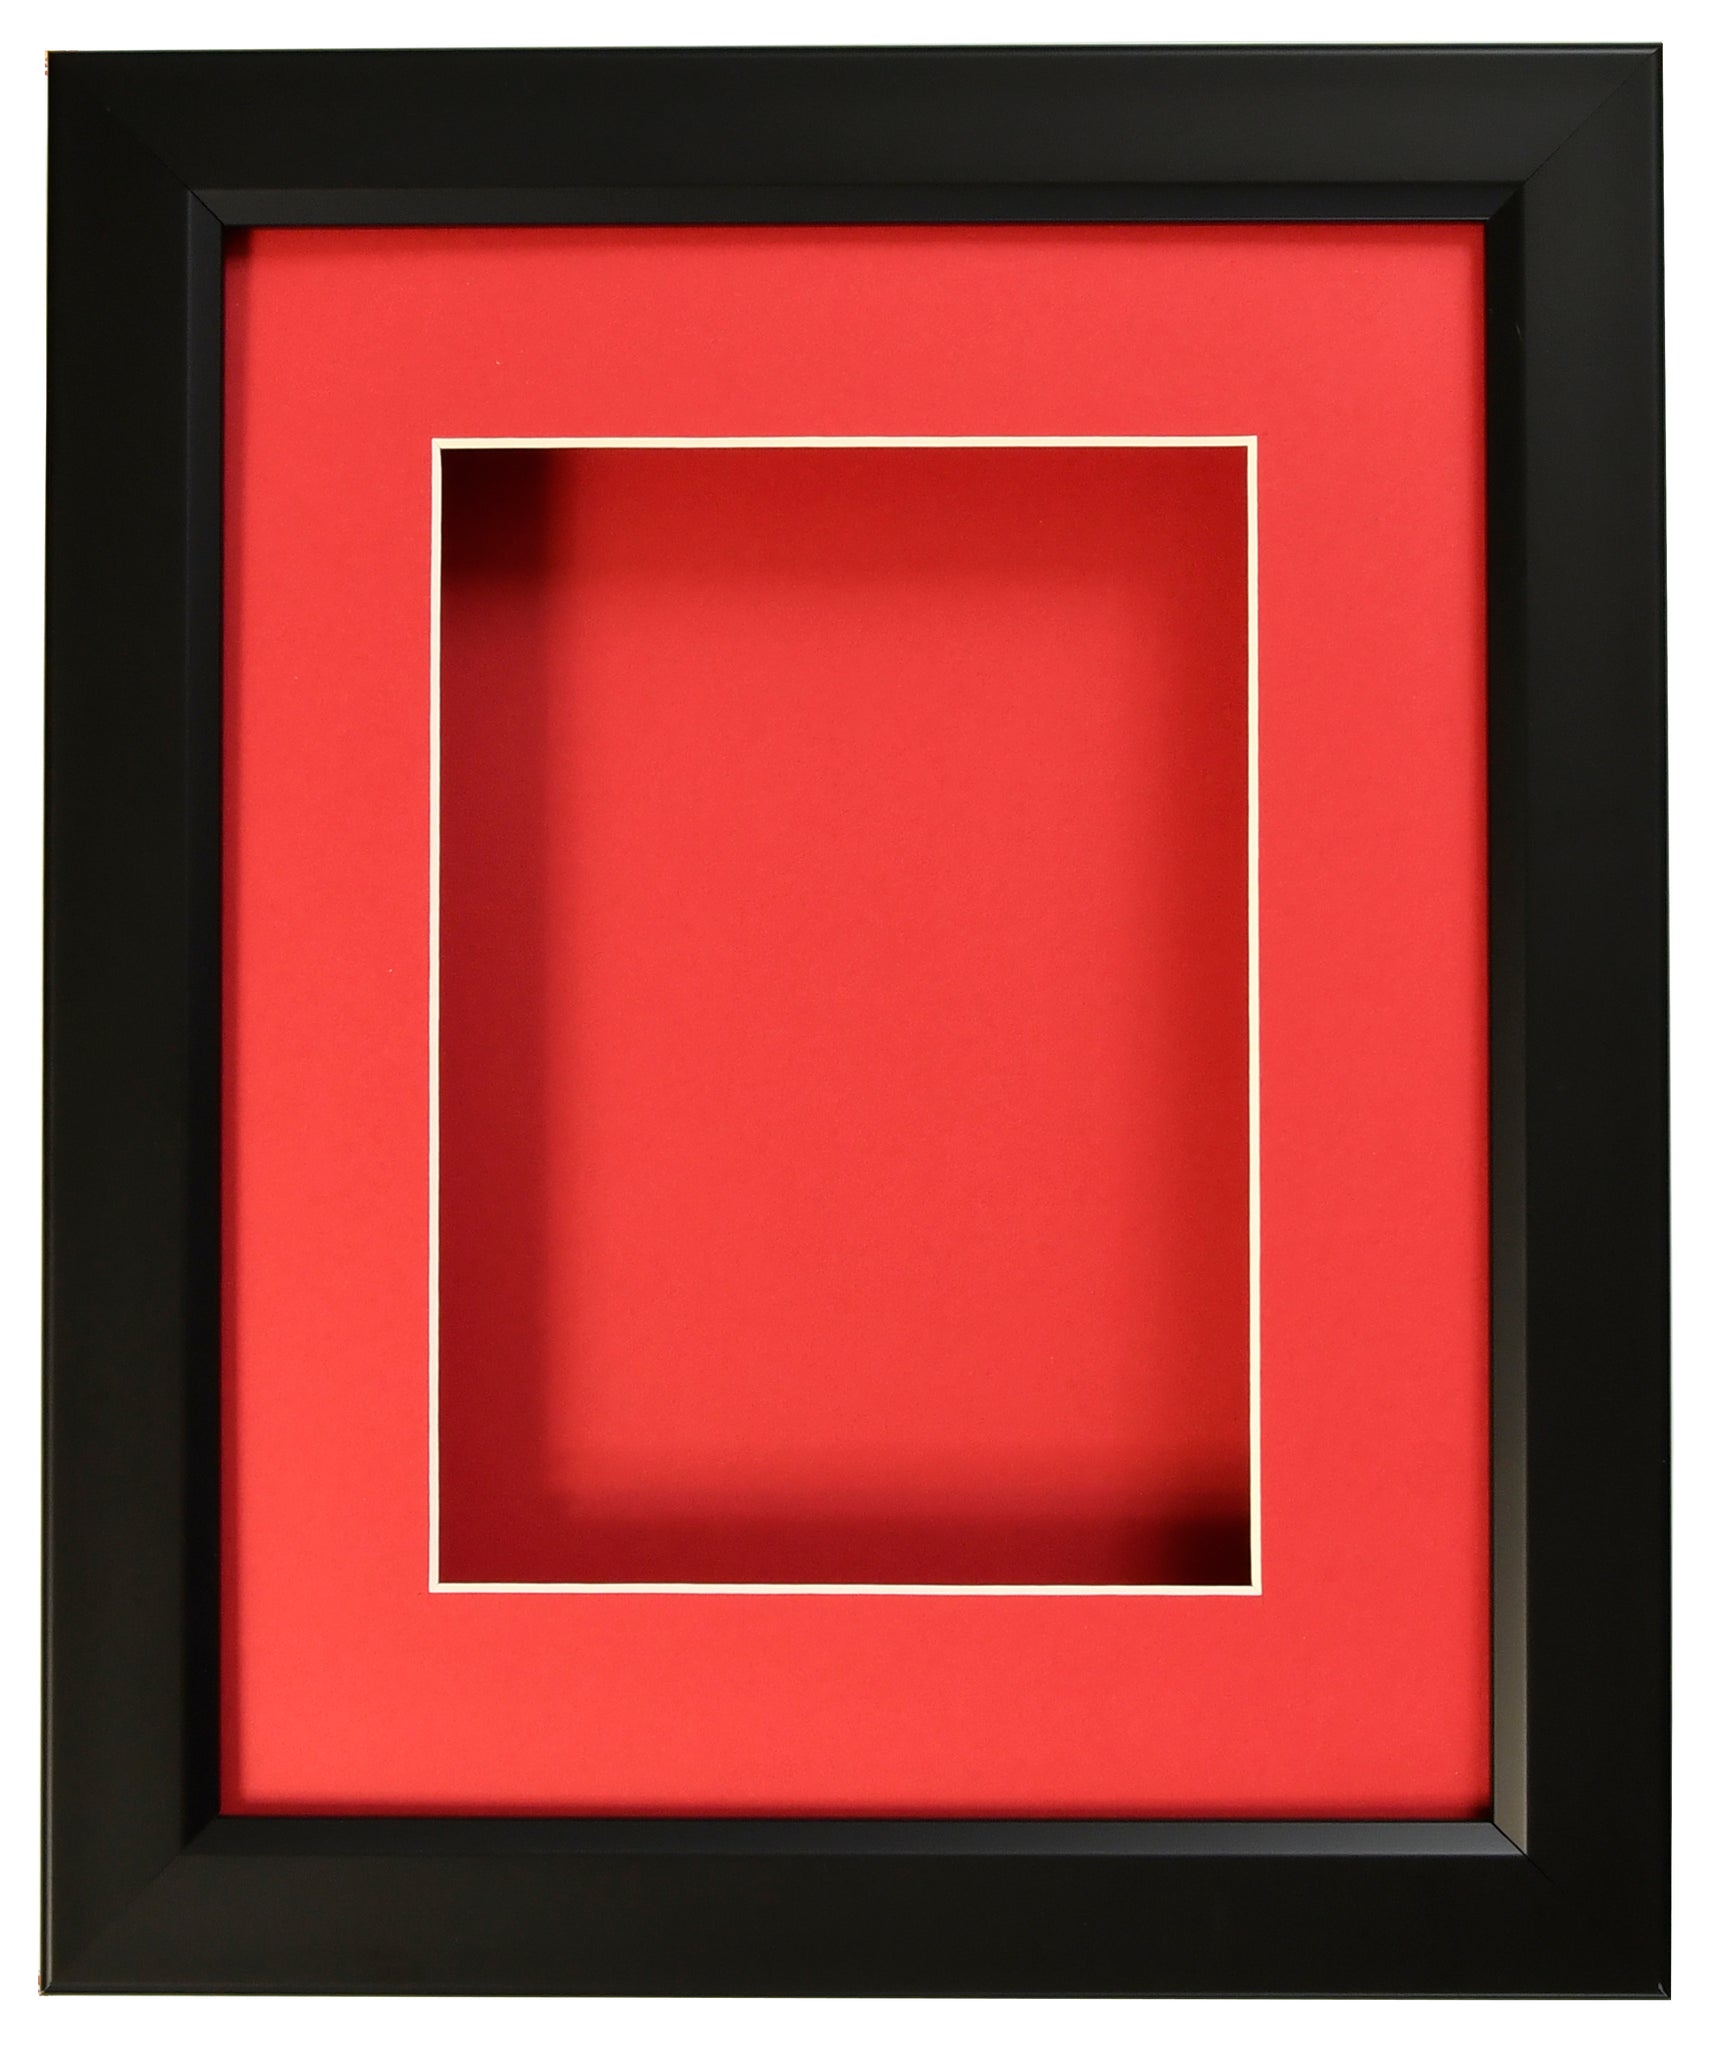 SHADOW BOX FRAME - BLACK FRAME - RED MAT - CLEAR GLASS - 1" DEPTH